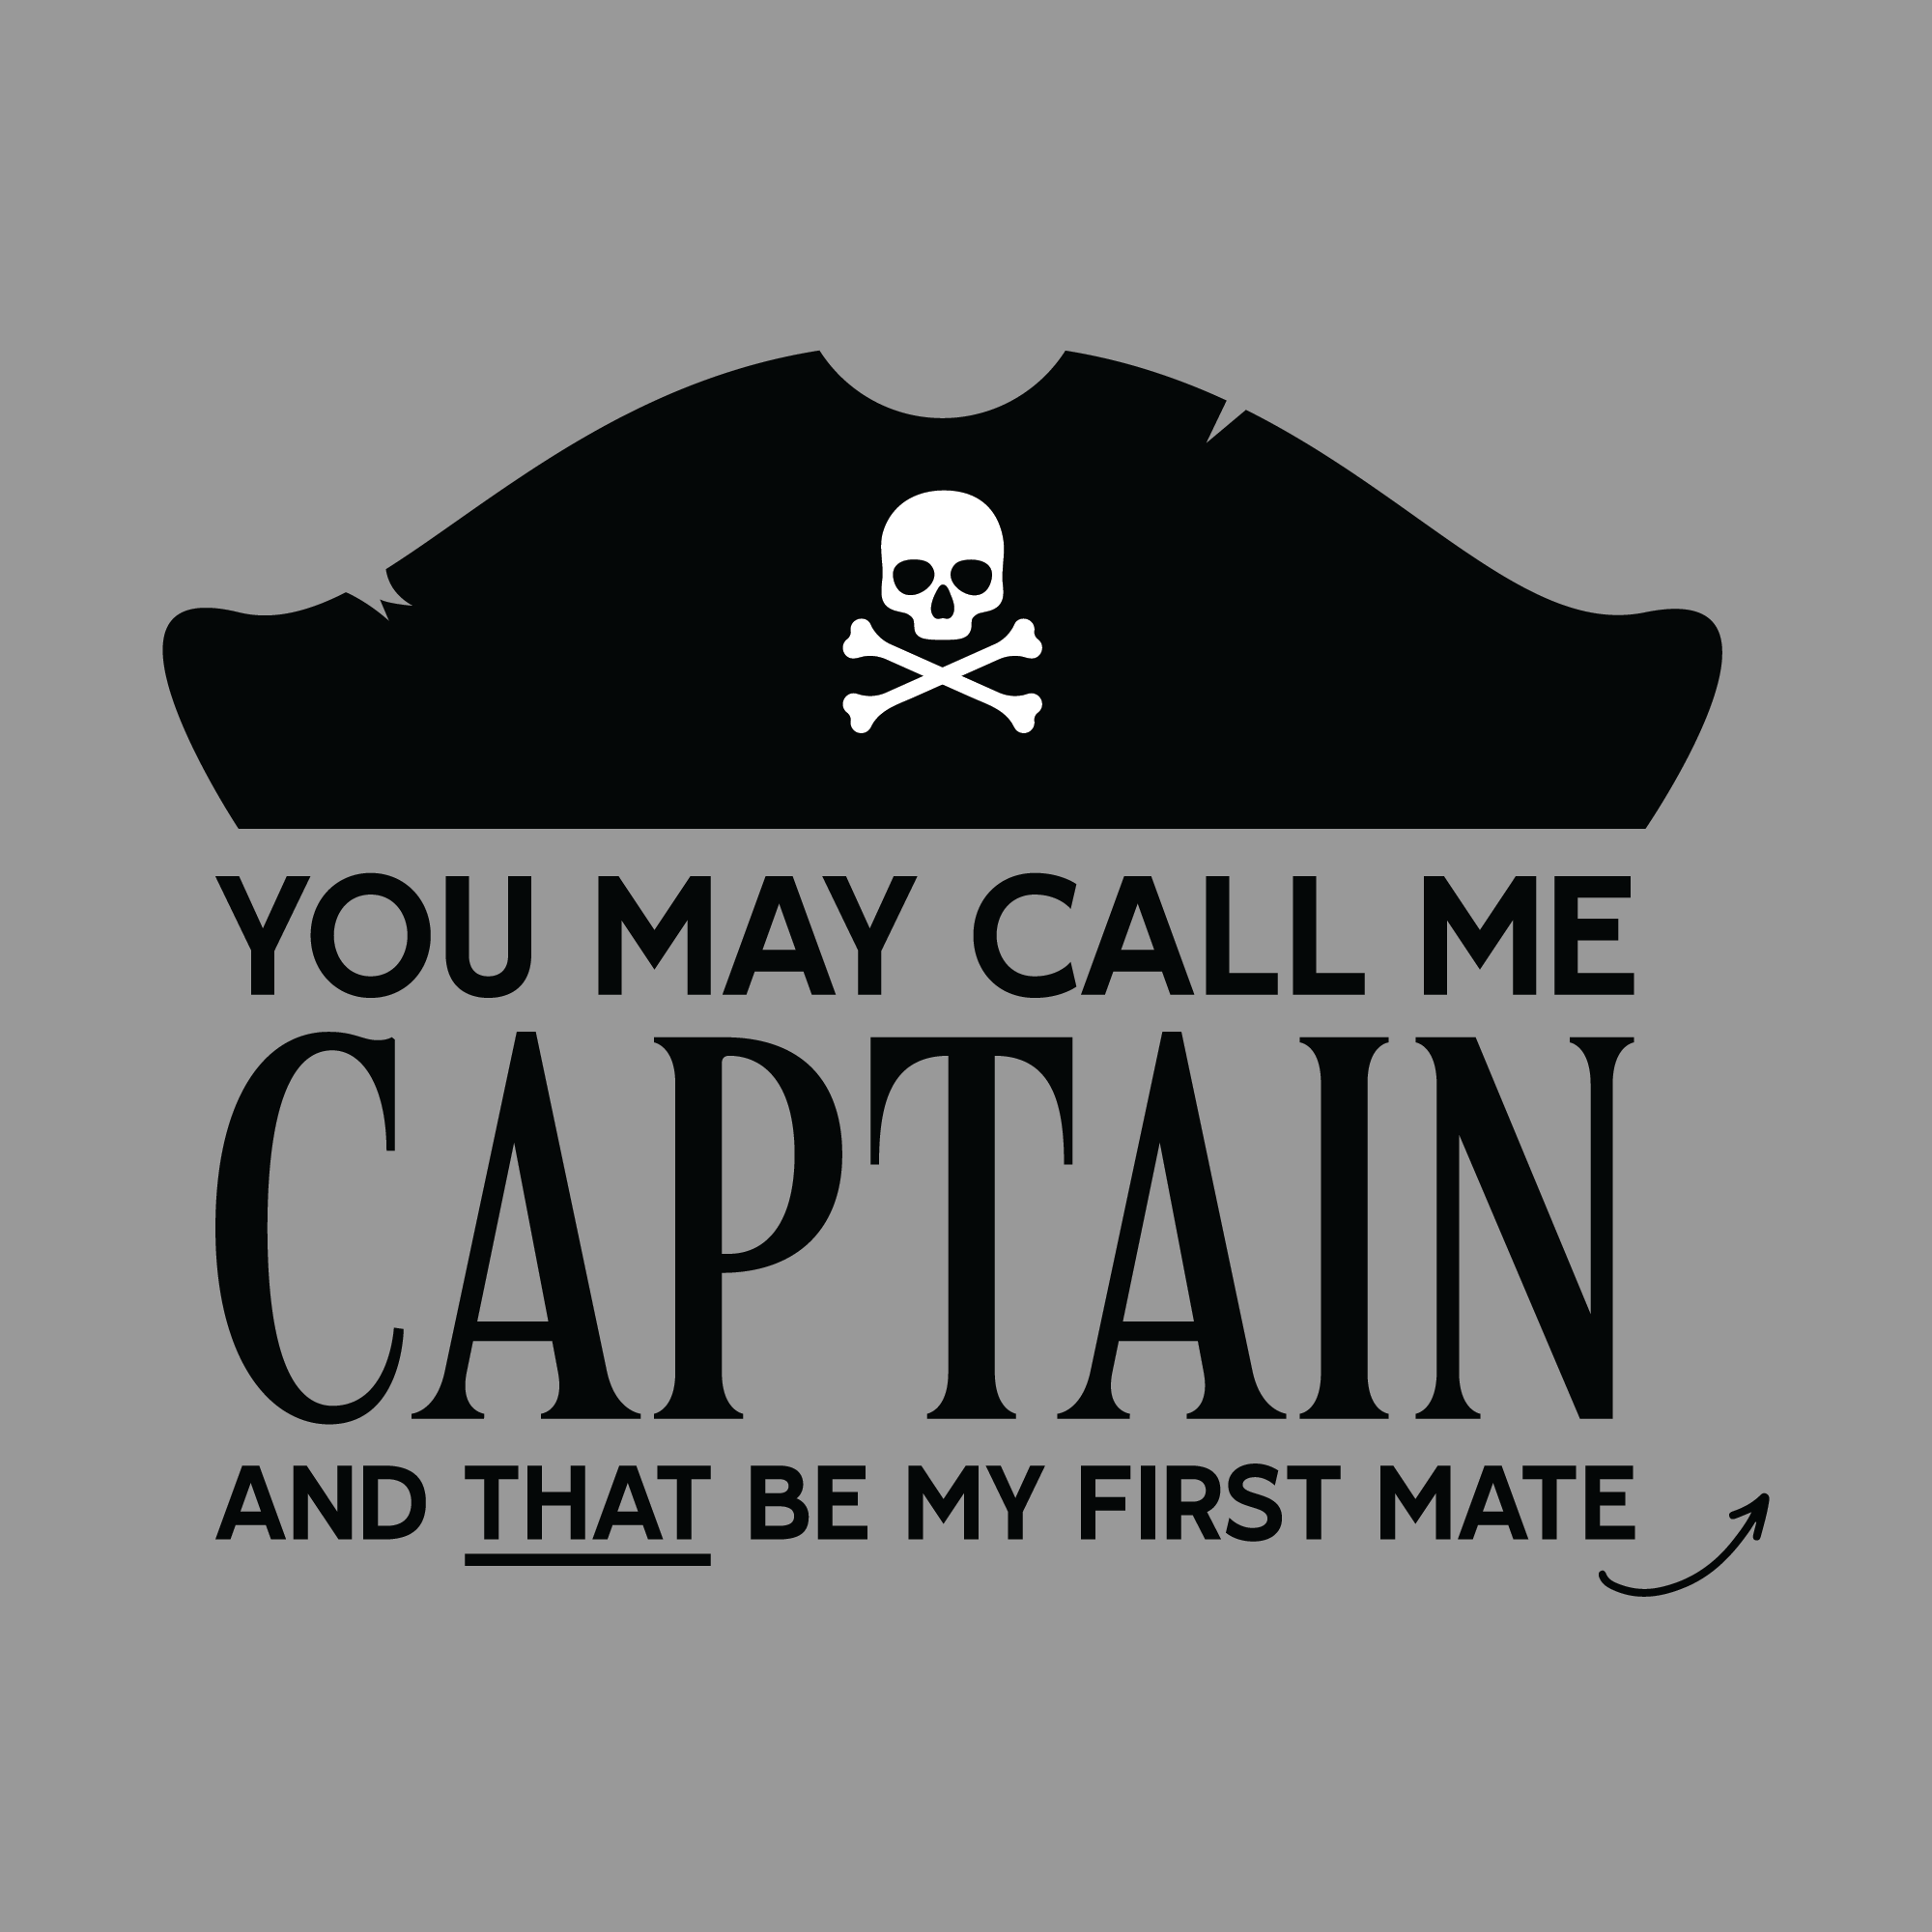 Who do you call captain?